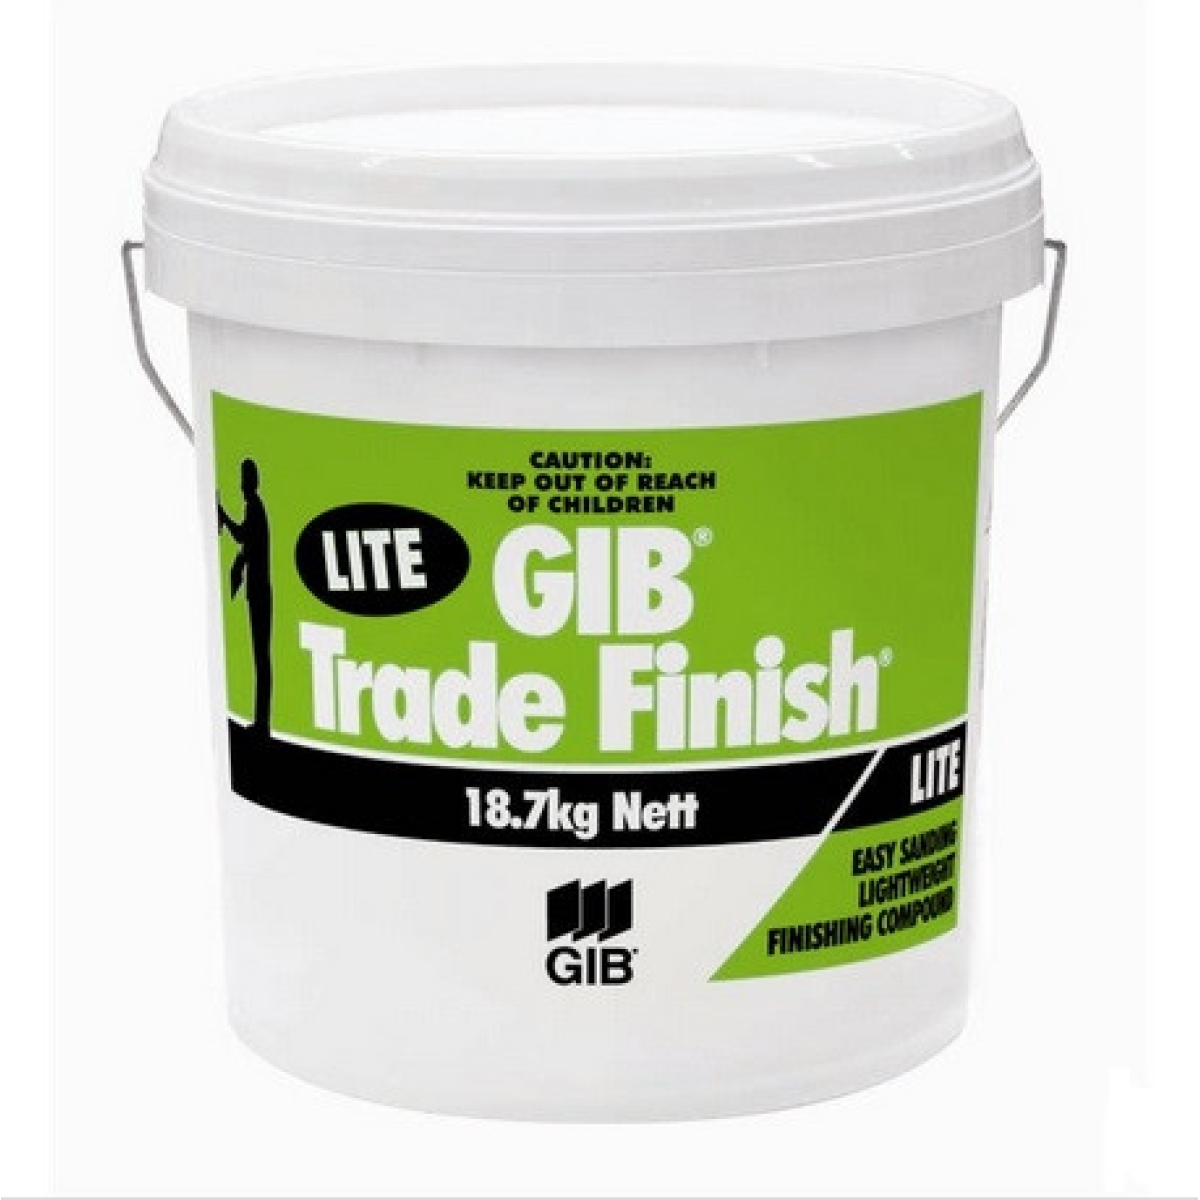 Gib Trade Finish Lite 15L